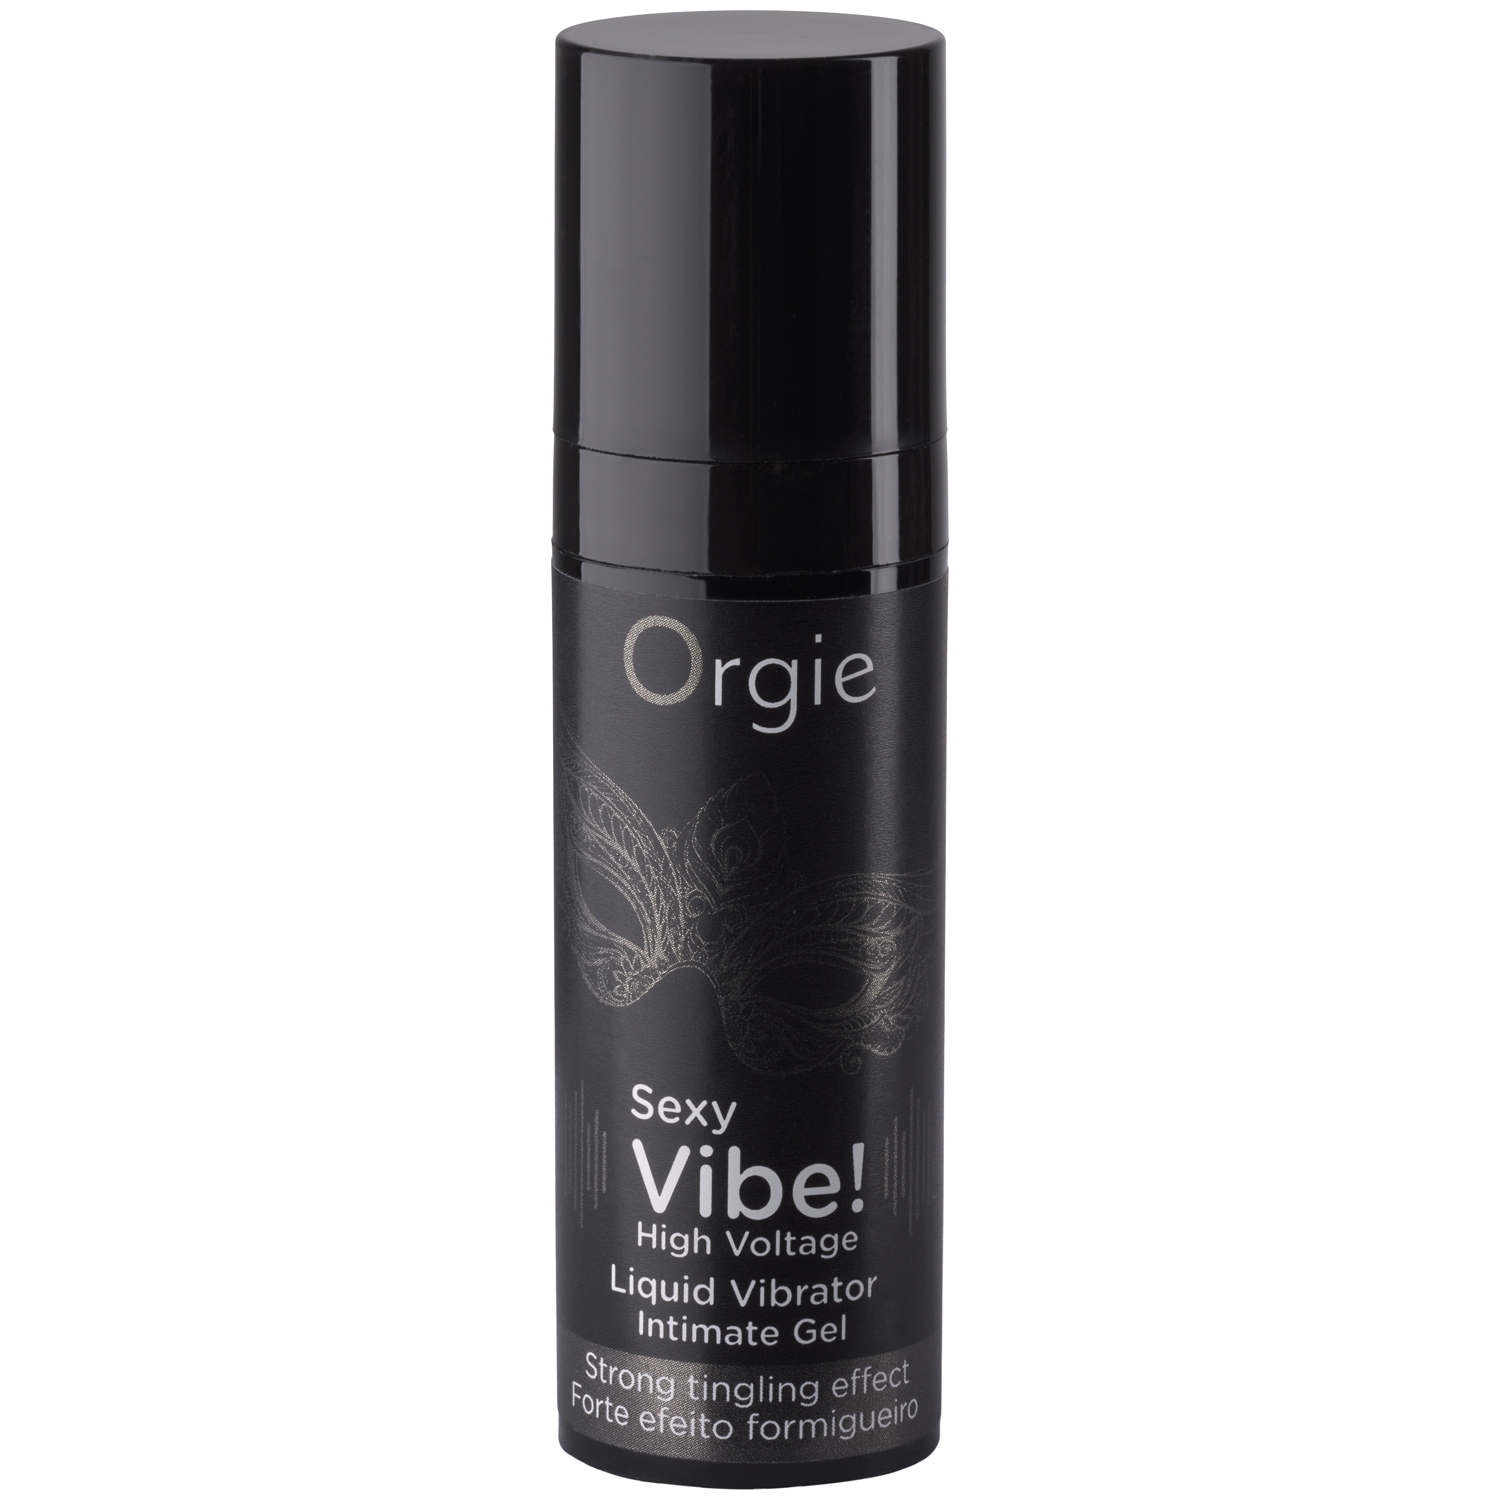 Orgie Sexy Vibe! High Voltage Liquid Vibrator Intimgel 15 ml - Sort thumbnail